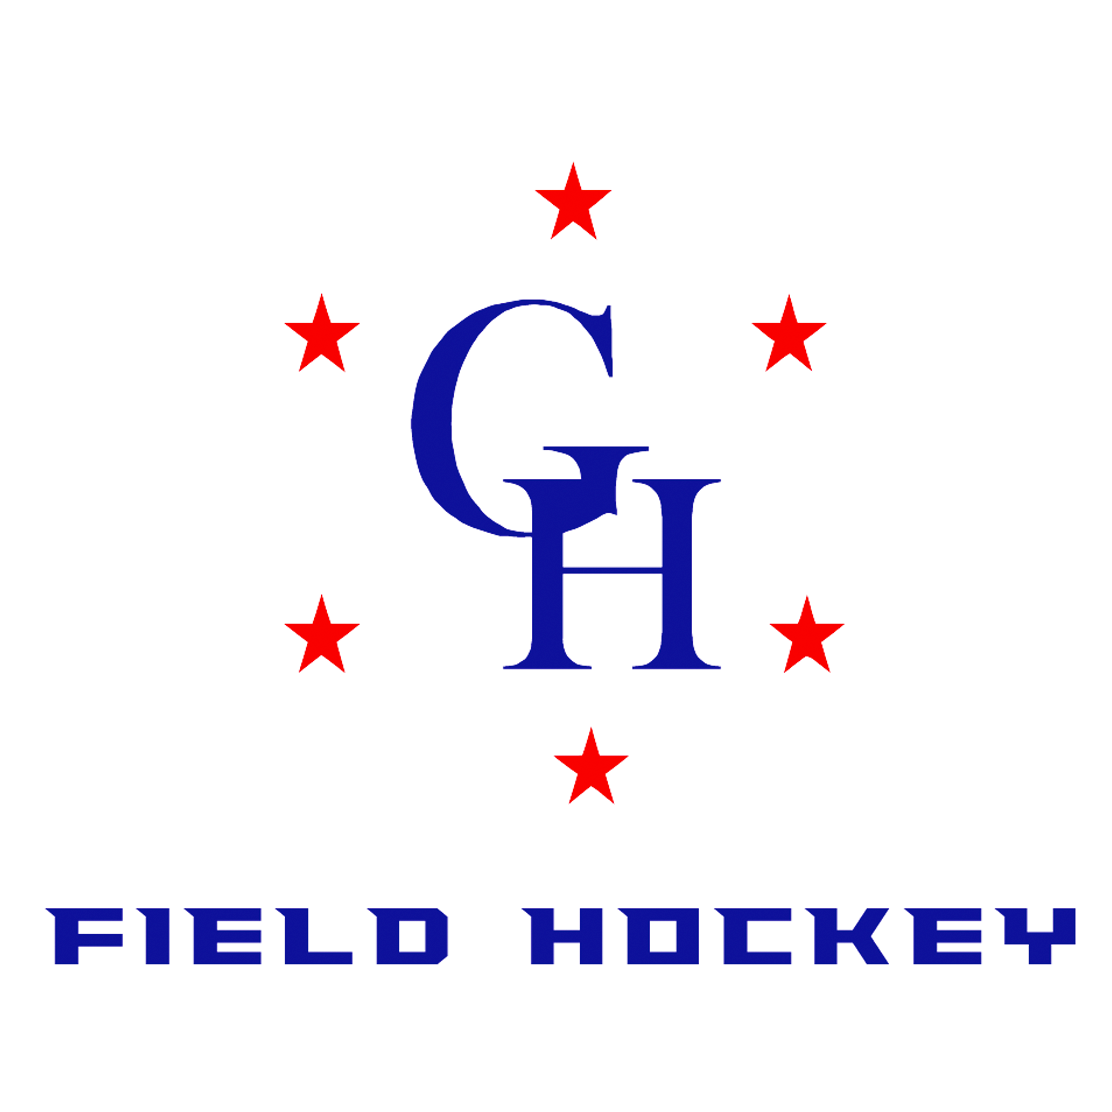 Great Hollow Middle School Field Hockey Team Sore